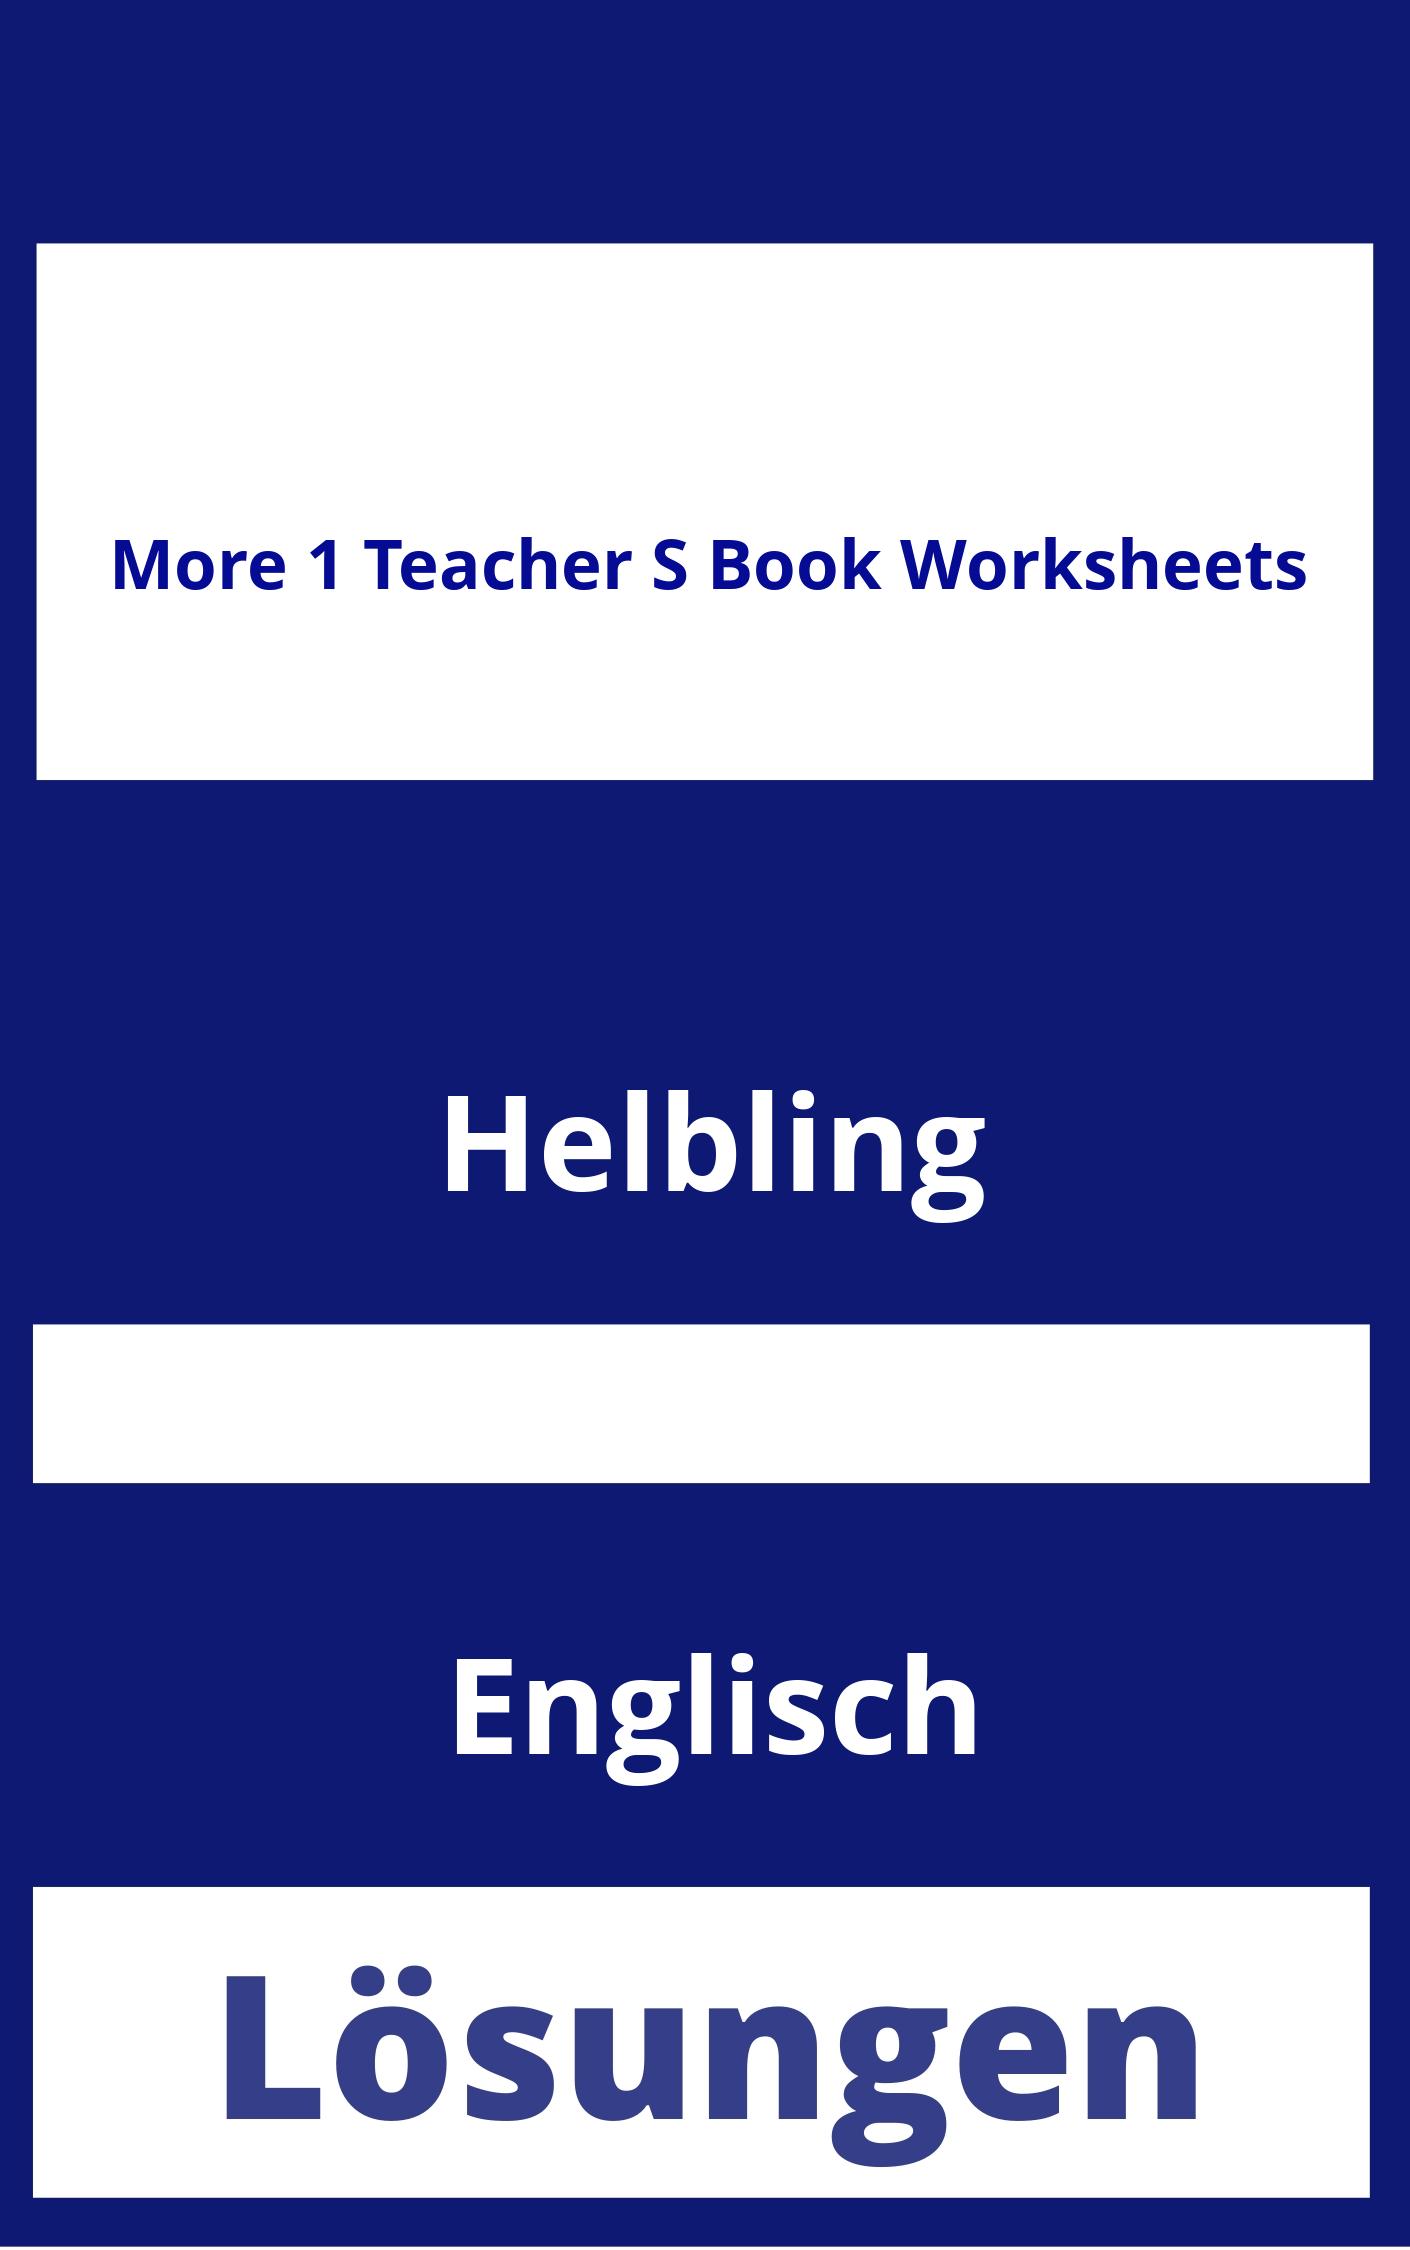 More 1 Teacher's book Worksheets